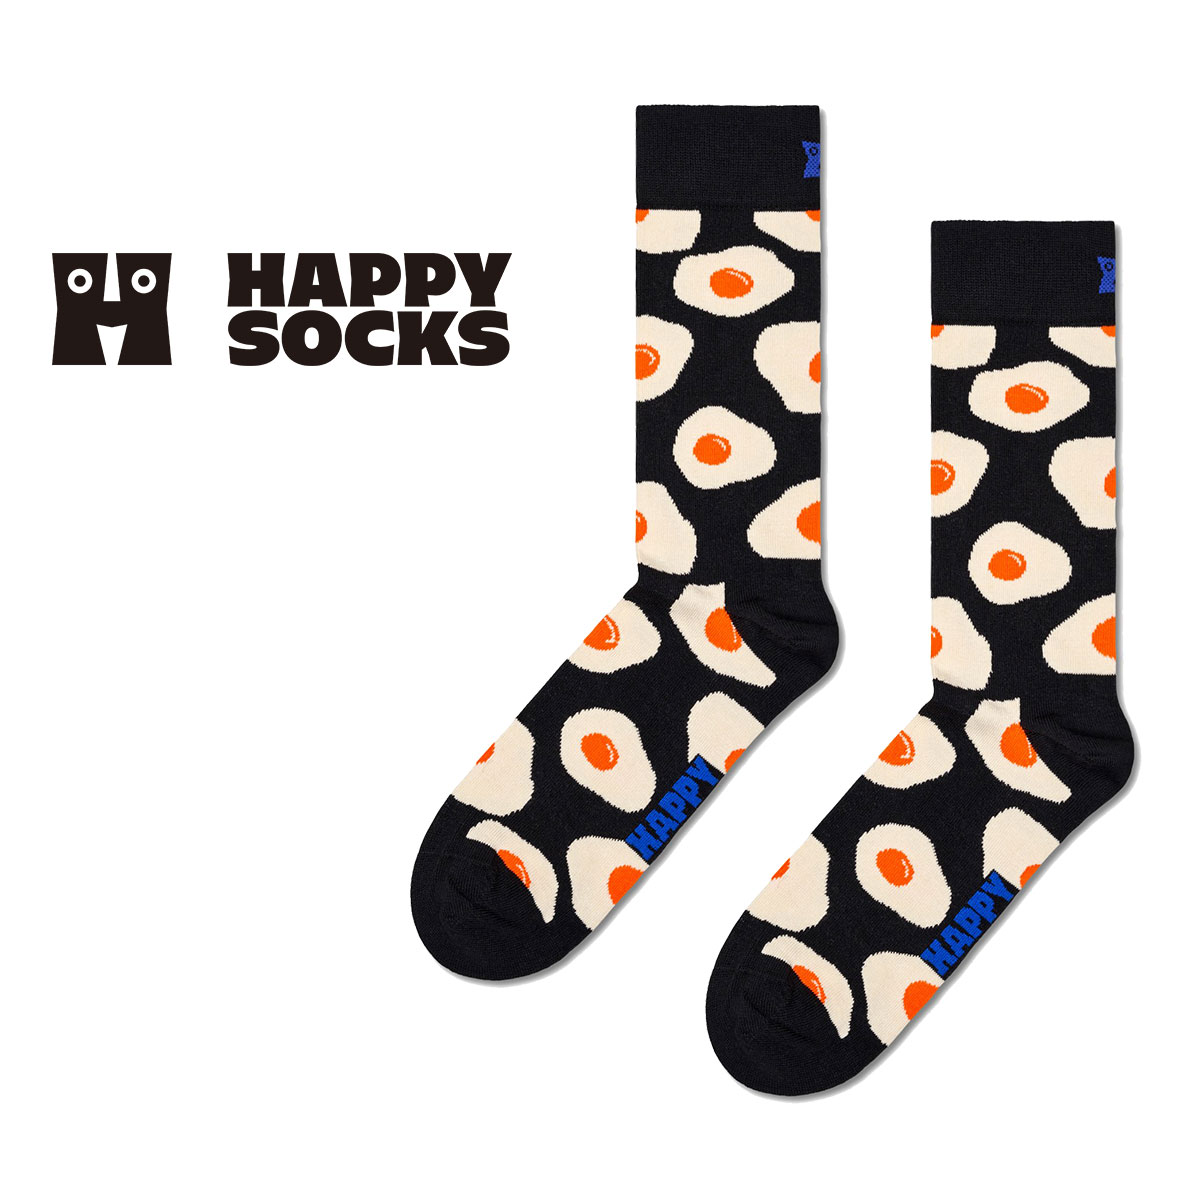 【24SS】Happy Socks ハッピーソックス Sunny Side Up ( サニーサイドアップ ) 目玉焼き ブラック クルー丈 ソックス ユニセックス メンズ ＆ レディス 10240077